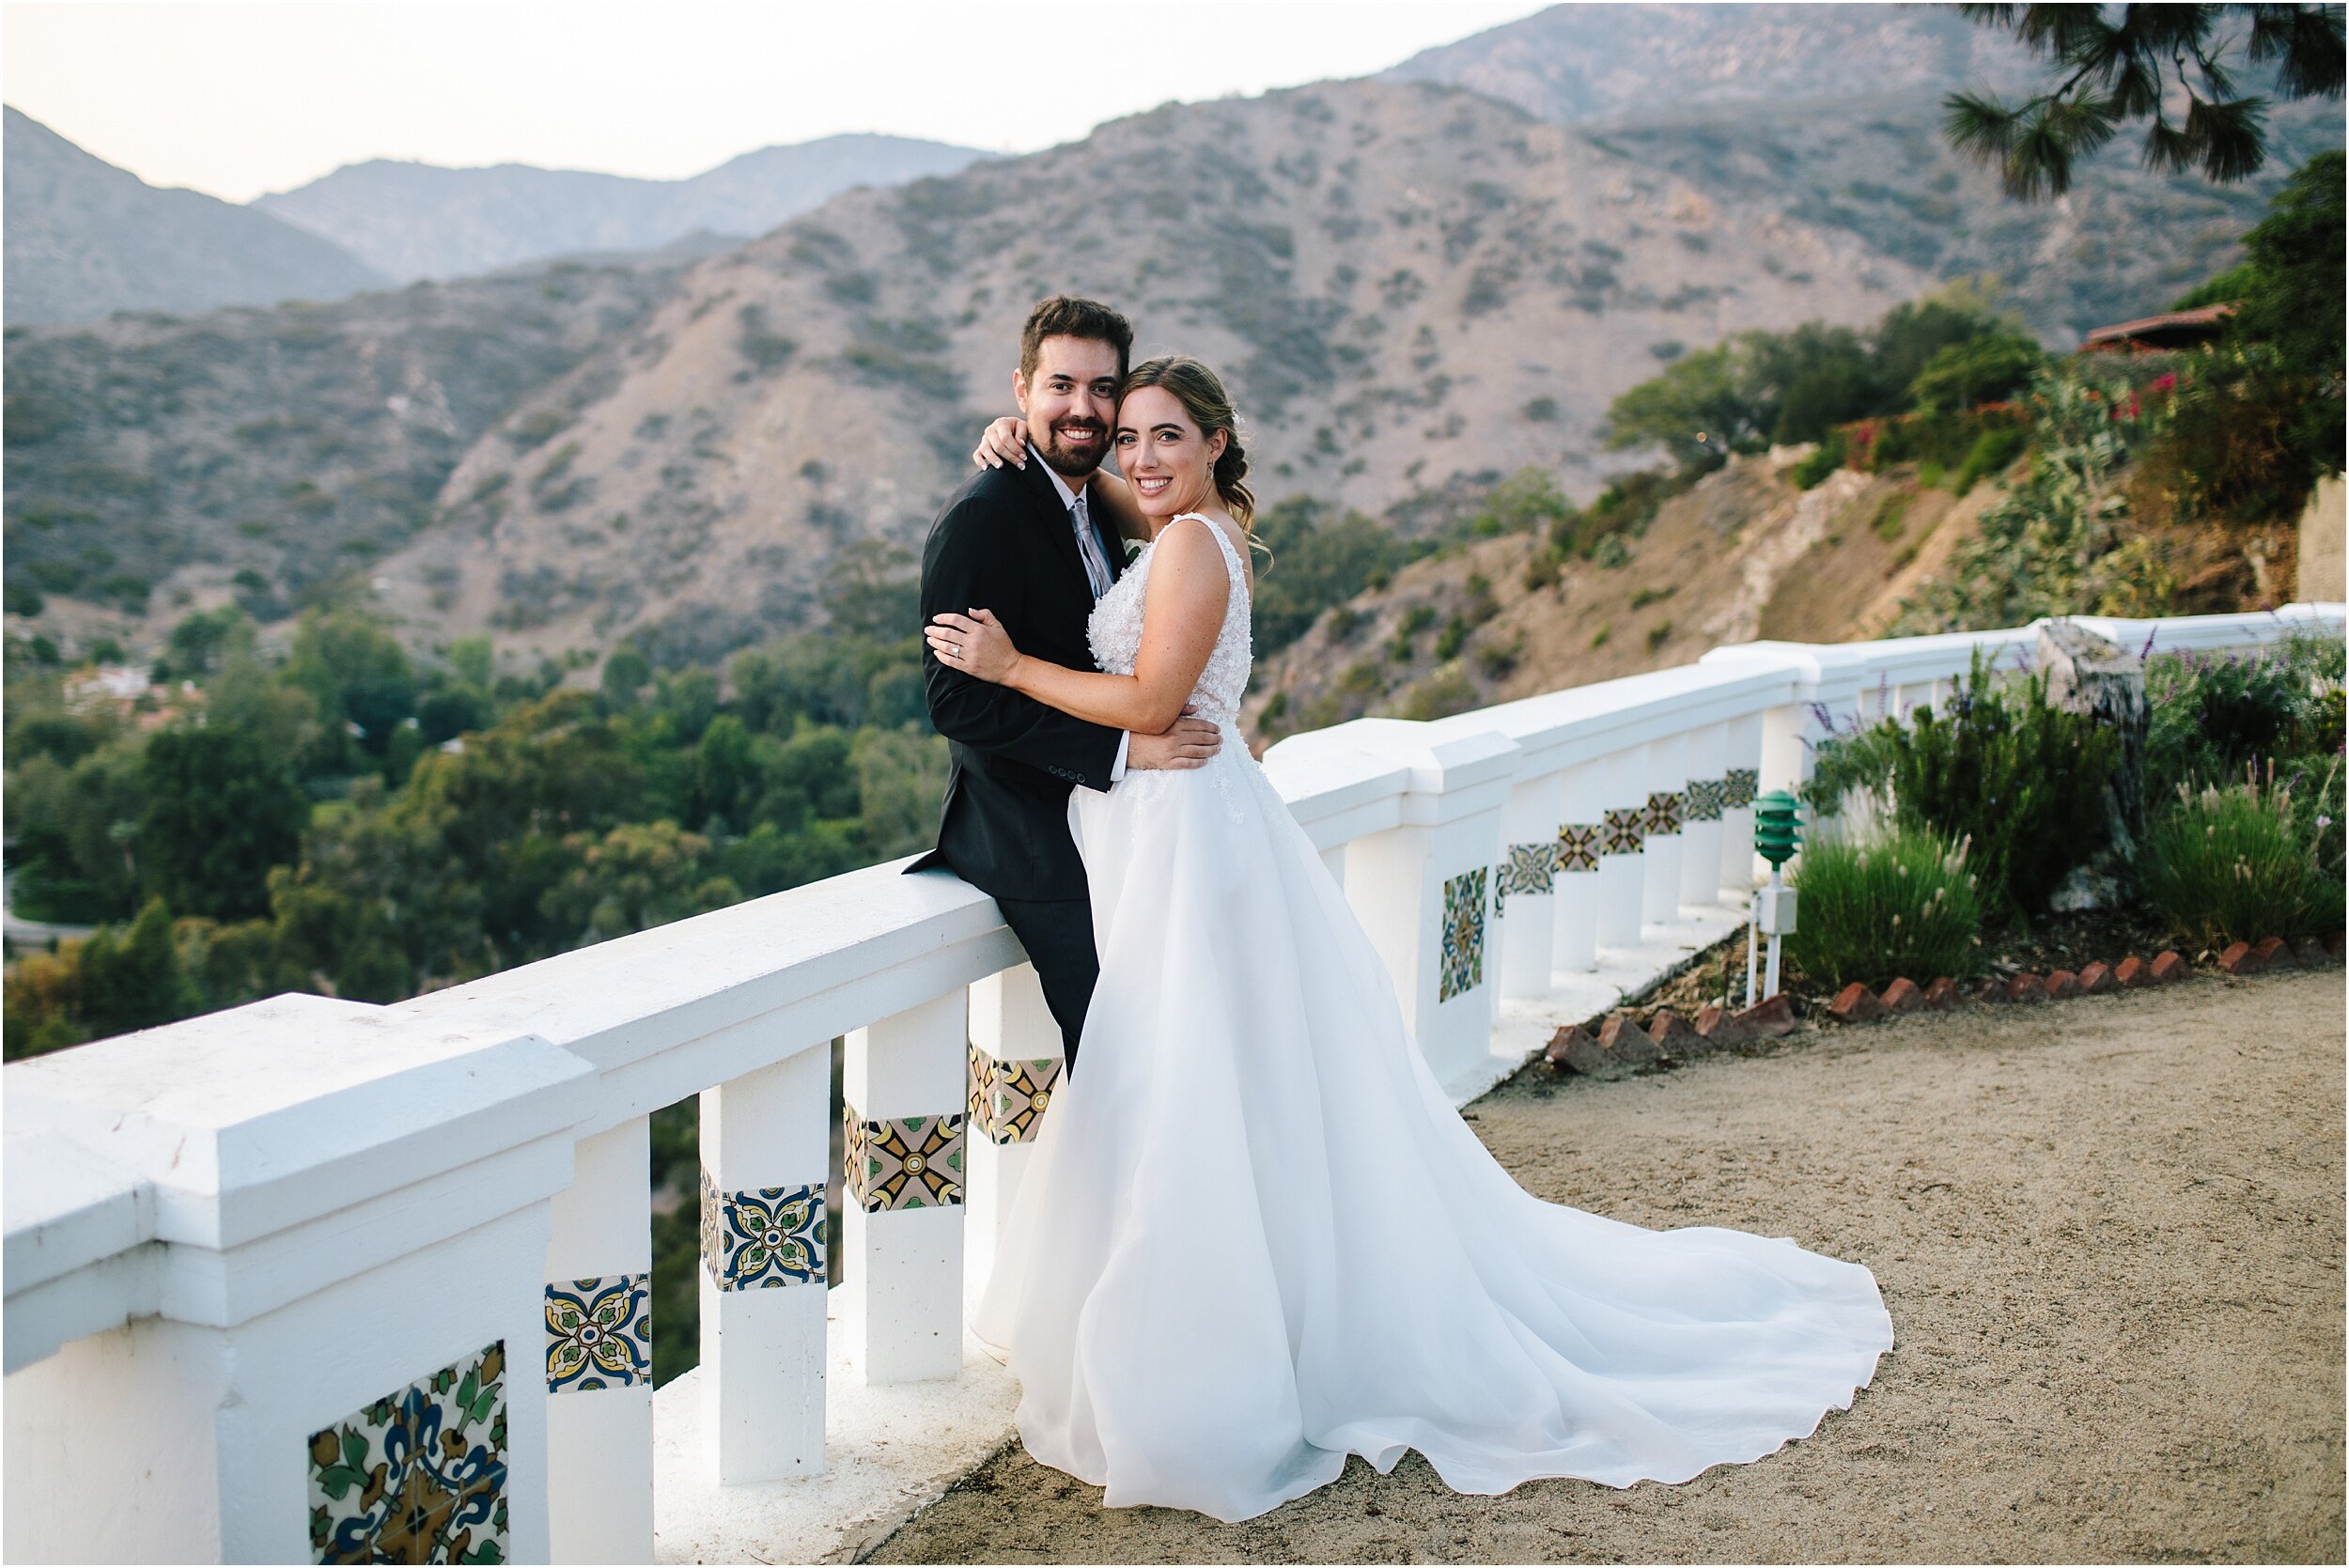 Caitlin and jason | Small Malibu Wedding | Malibu Elopement Photographer_0059.jpg